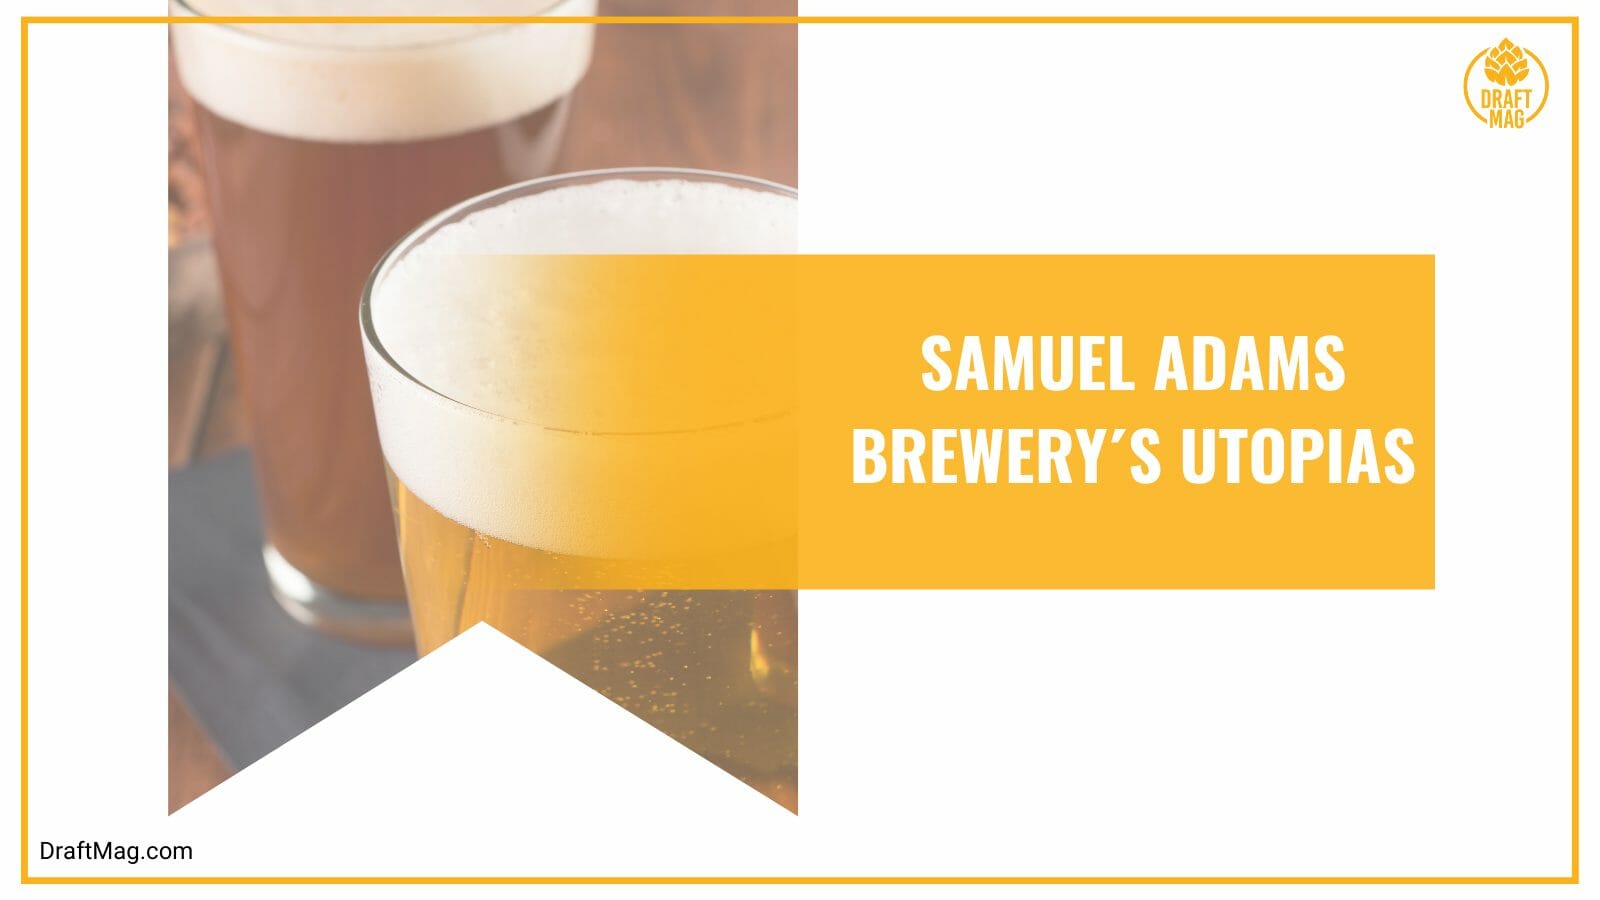 Samuel adams brewery utopias